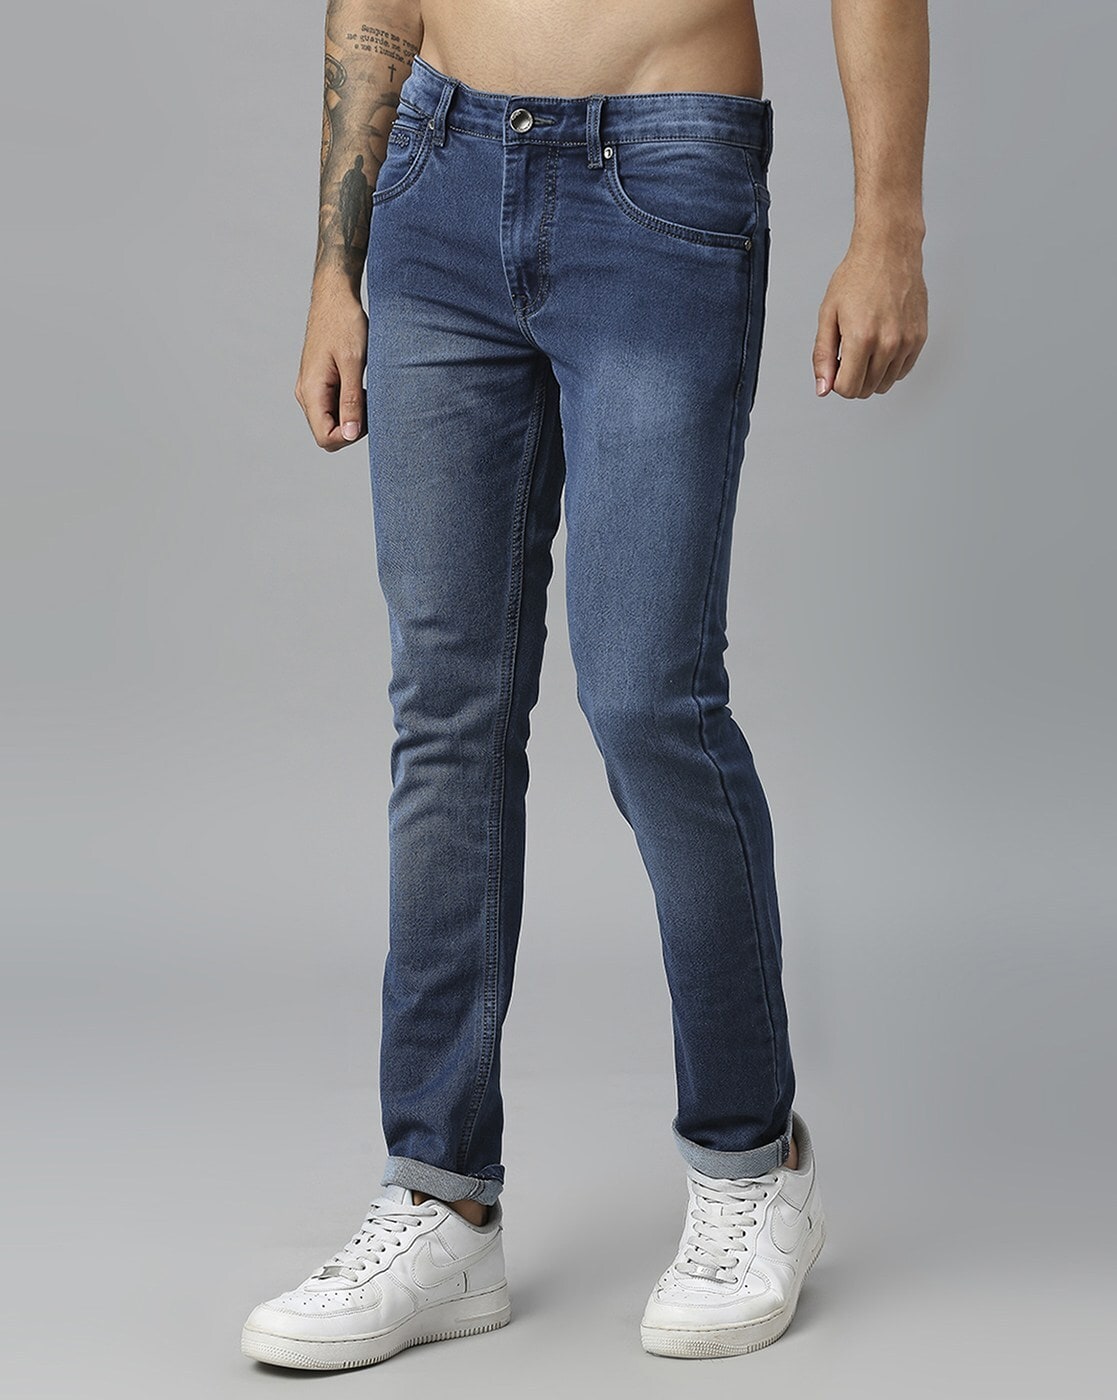 Pantete Mens Slim Fit Jeans 7 Pockets Stretch Skinny Denim Pencil Pants  Nova Fashion at Amazon Men's Clothing store